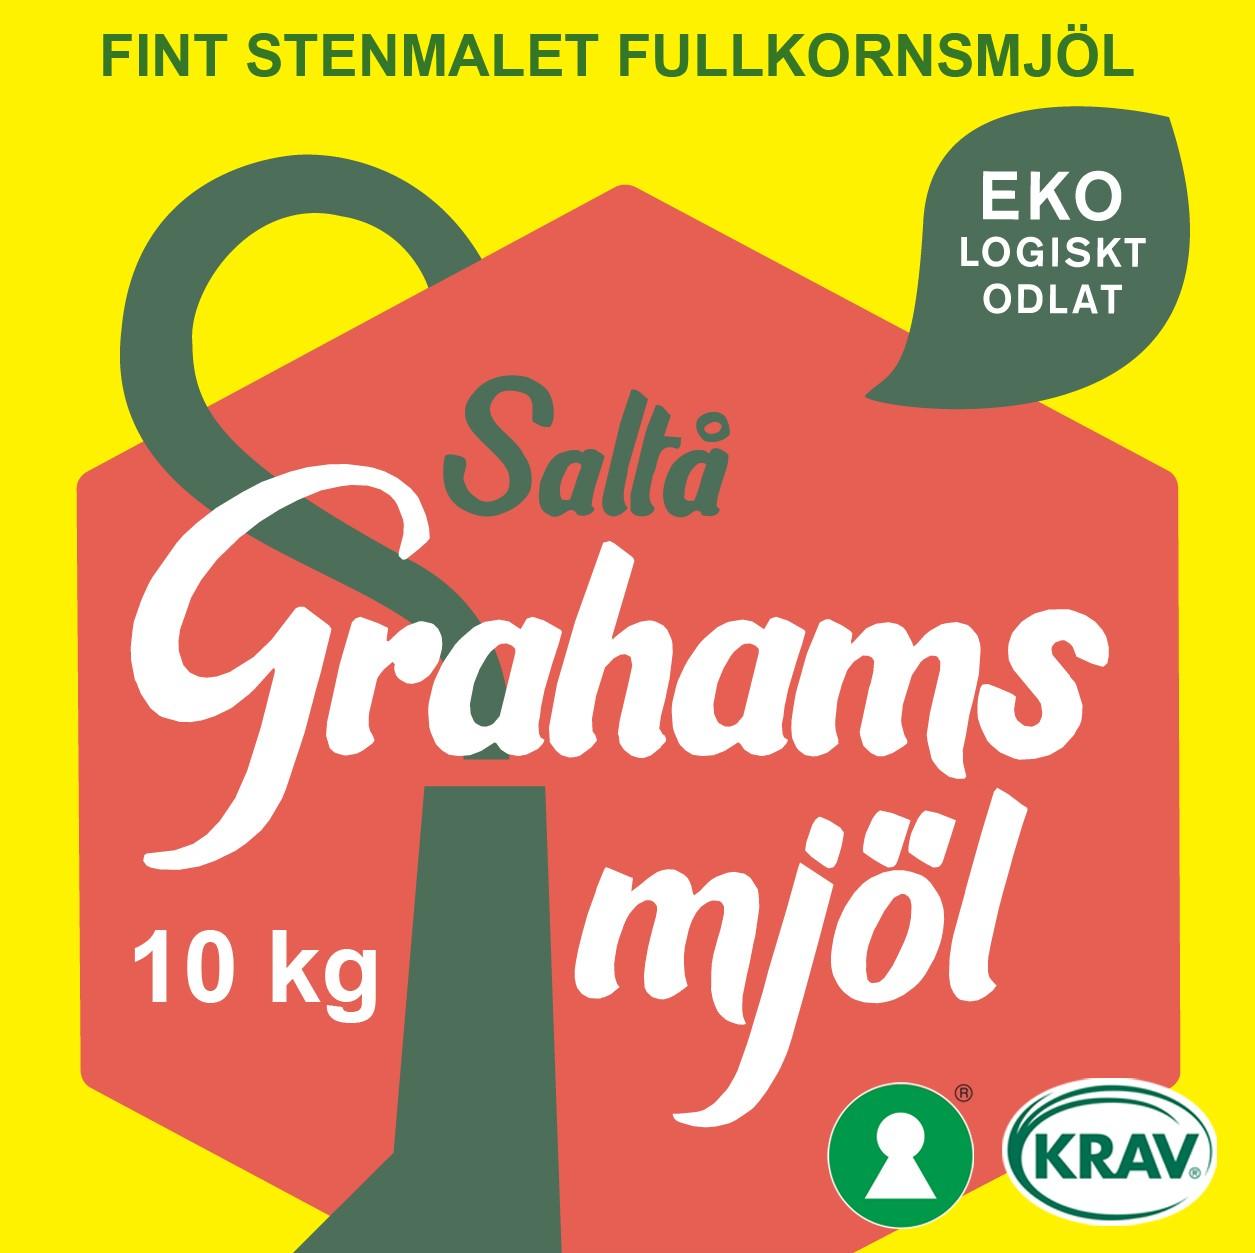 Saltå Kvarn's Grahamsmjöl fint'